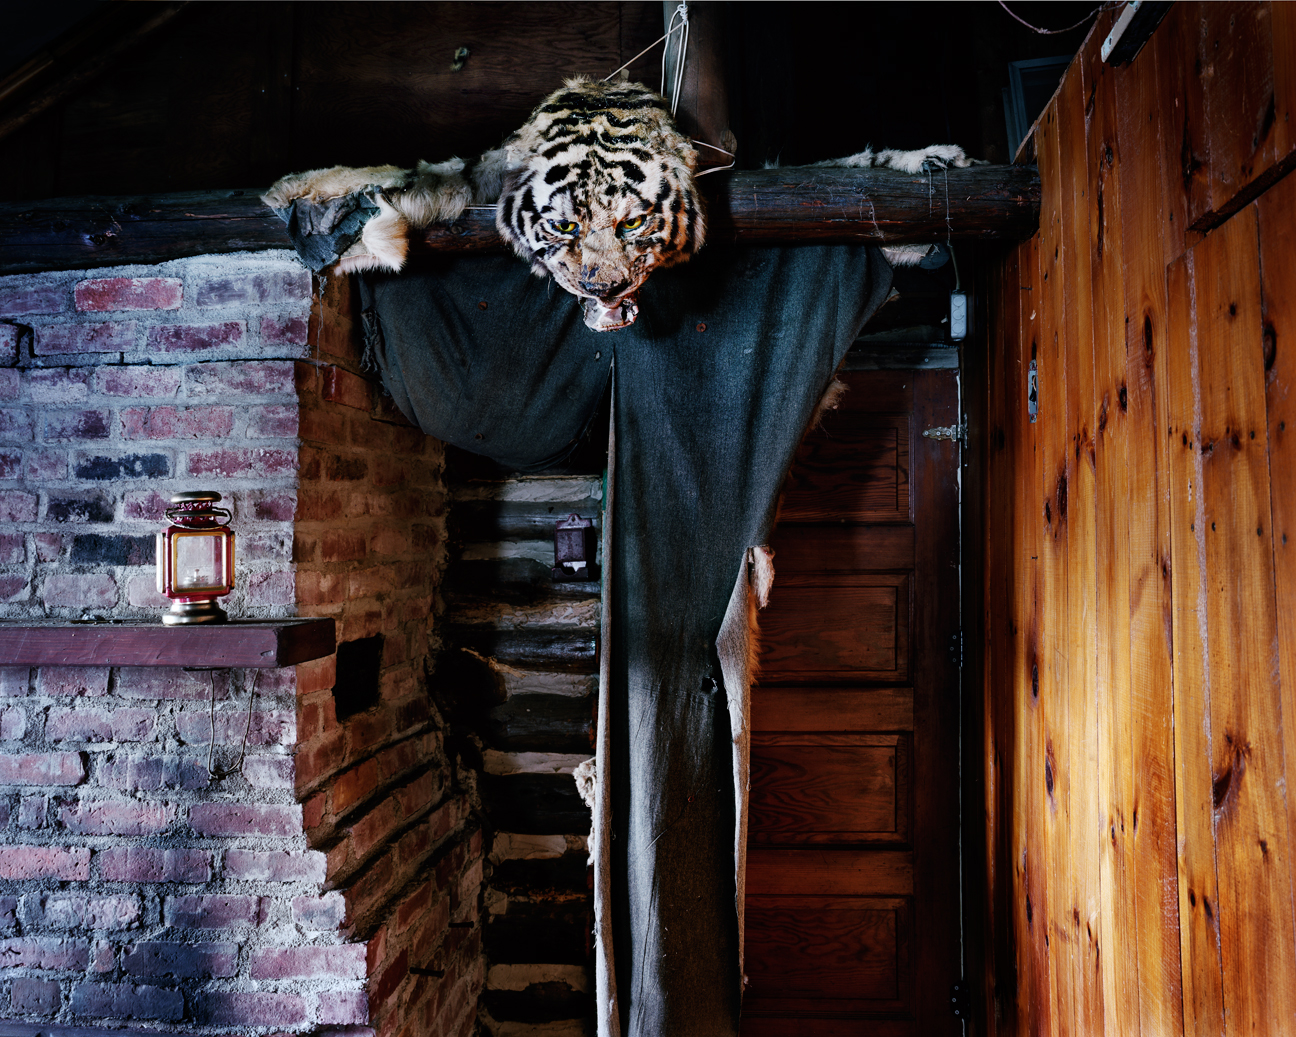 Tiger, Linconville Maine